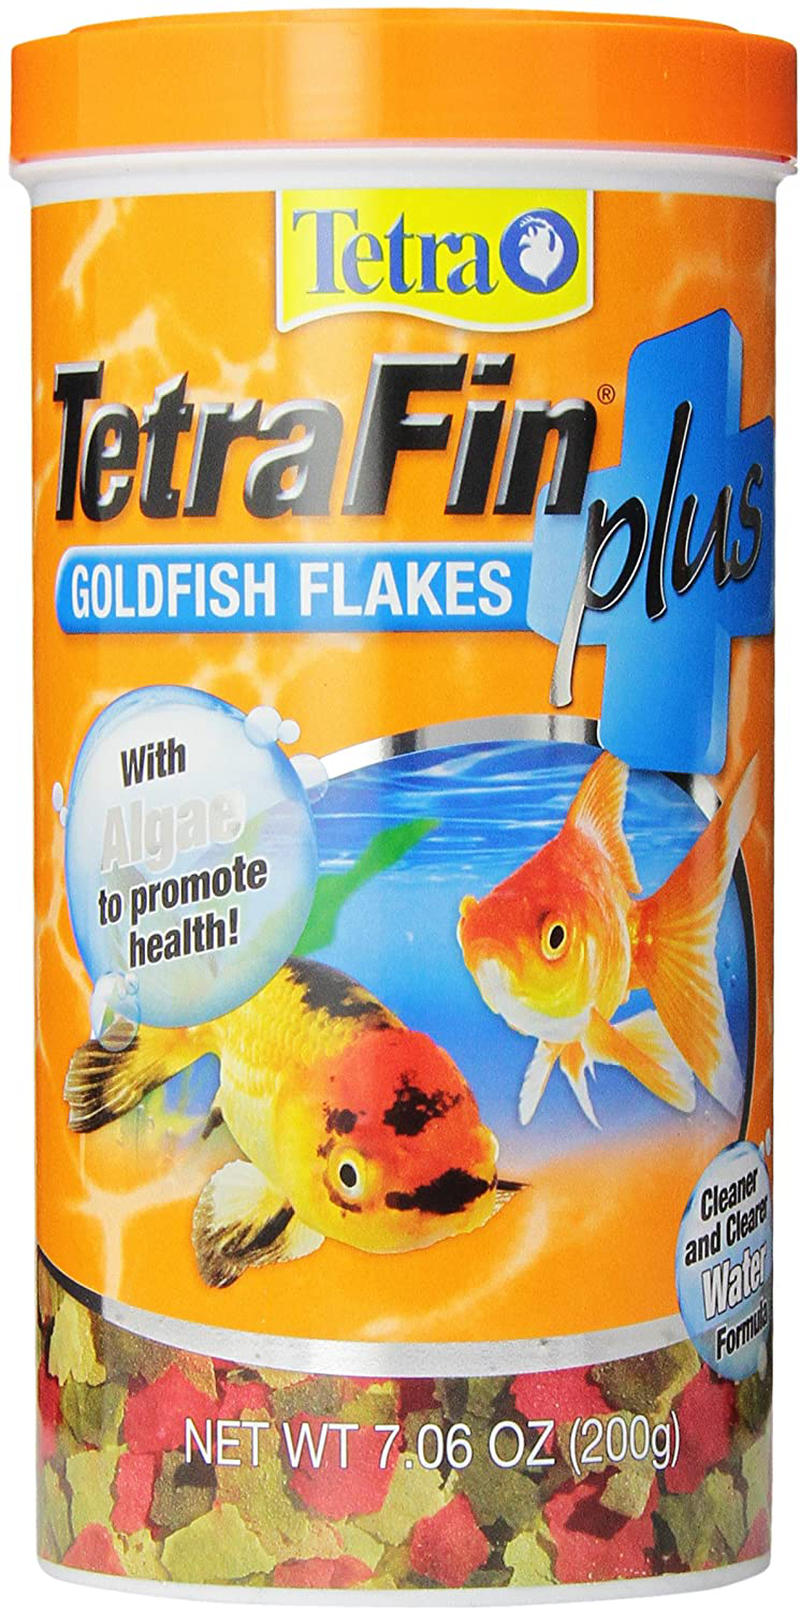 TetraFin Plus Goldfish Flakes 7.06 Ounces, Balanced Diet, With Algae To Promote Health